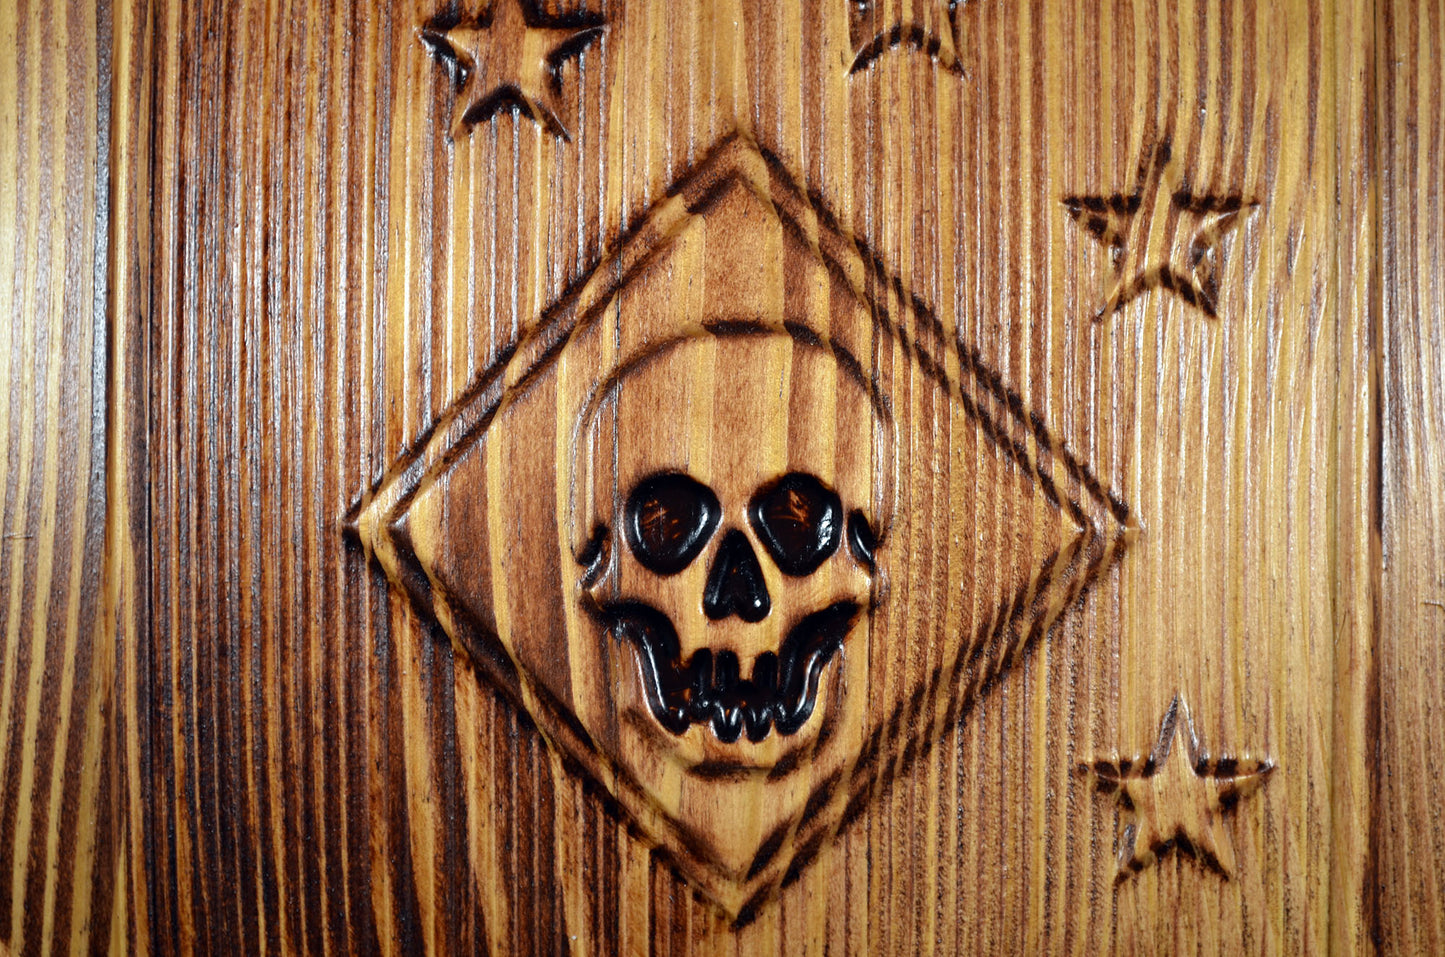 USMC Marine Raiders, Marine Special Operations Regiment, 3d CNC wood carving, military plaque